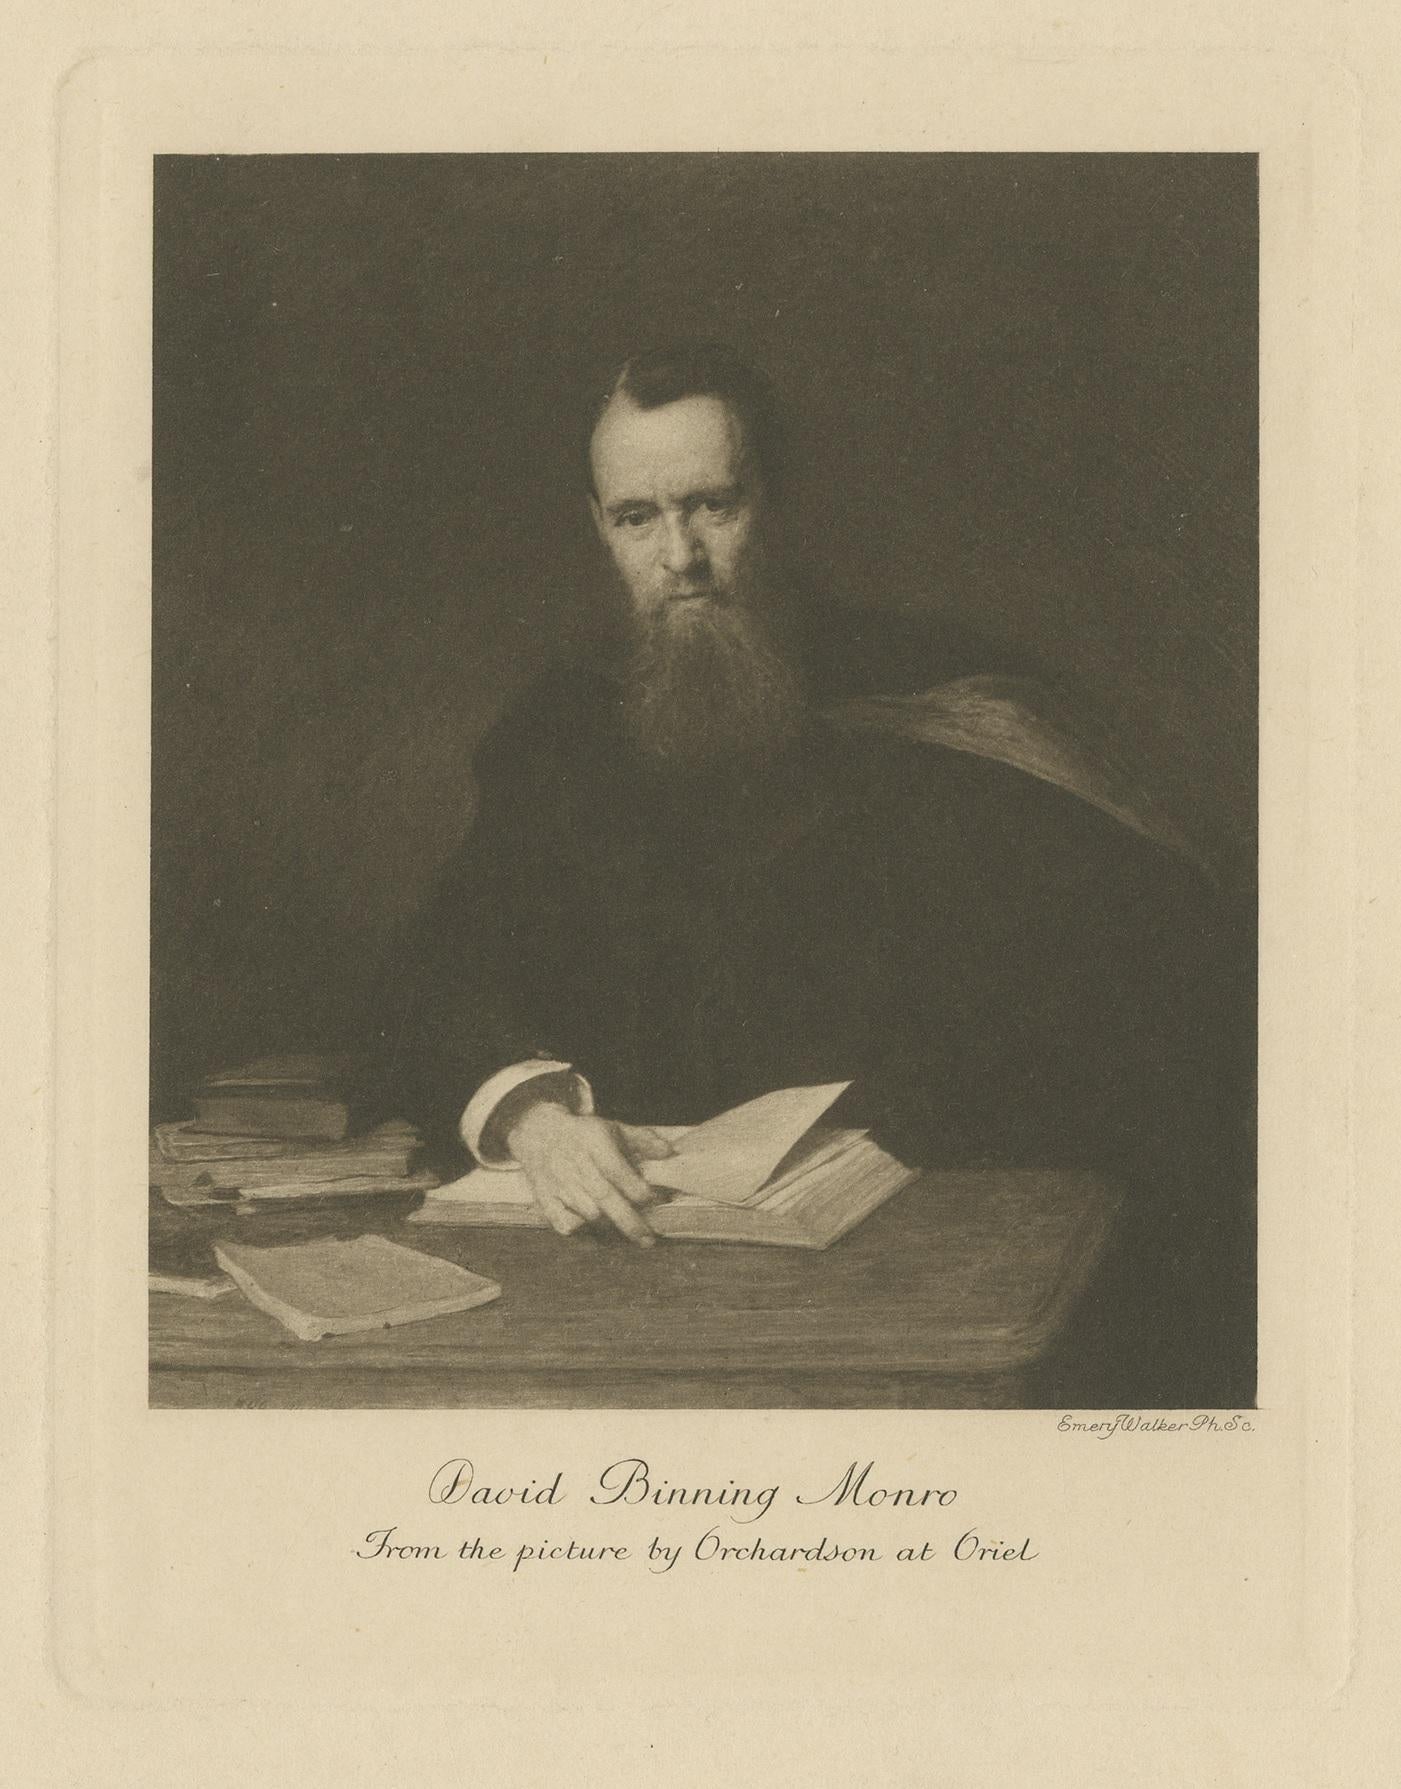 Antique print titled 'David Binning Monro'. Small portrait of David Monro, a Scottish Homeric scholar, Provost of Oriel College, Oxford, and Vice-Chancellor of Oxford University.